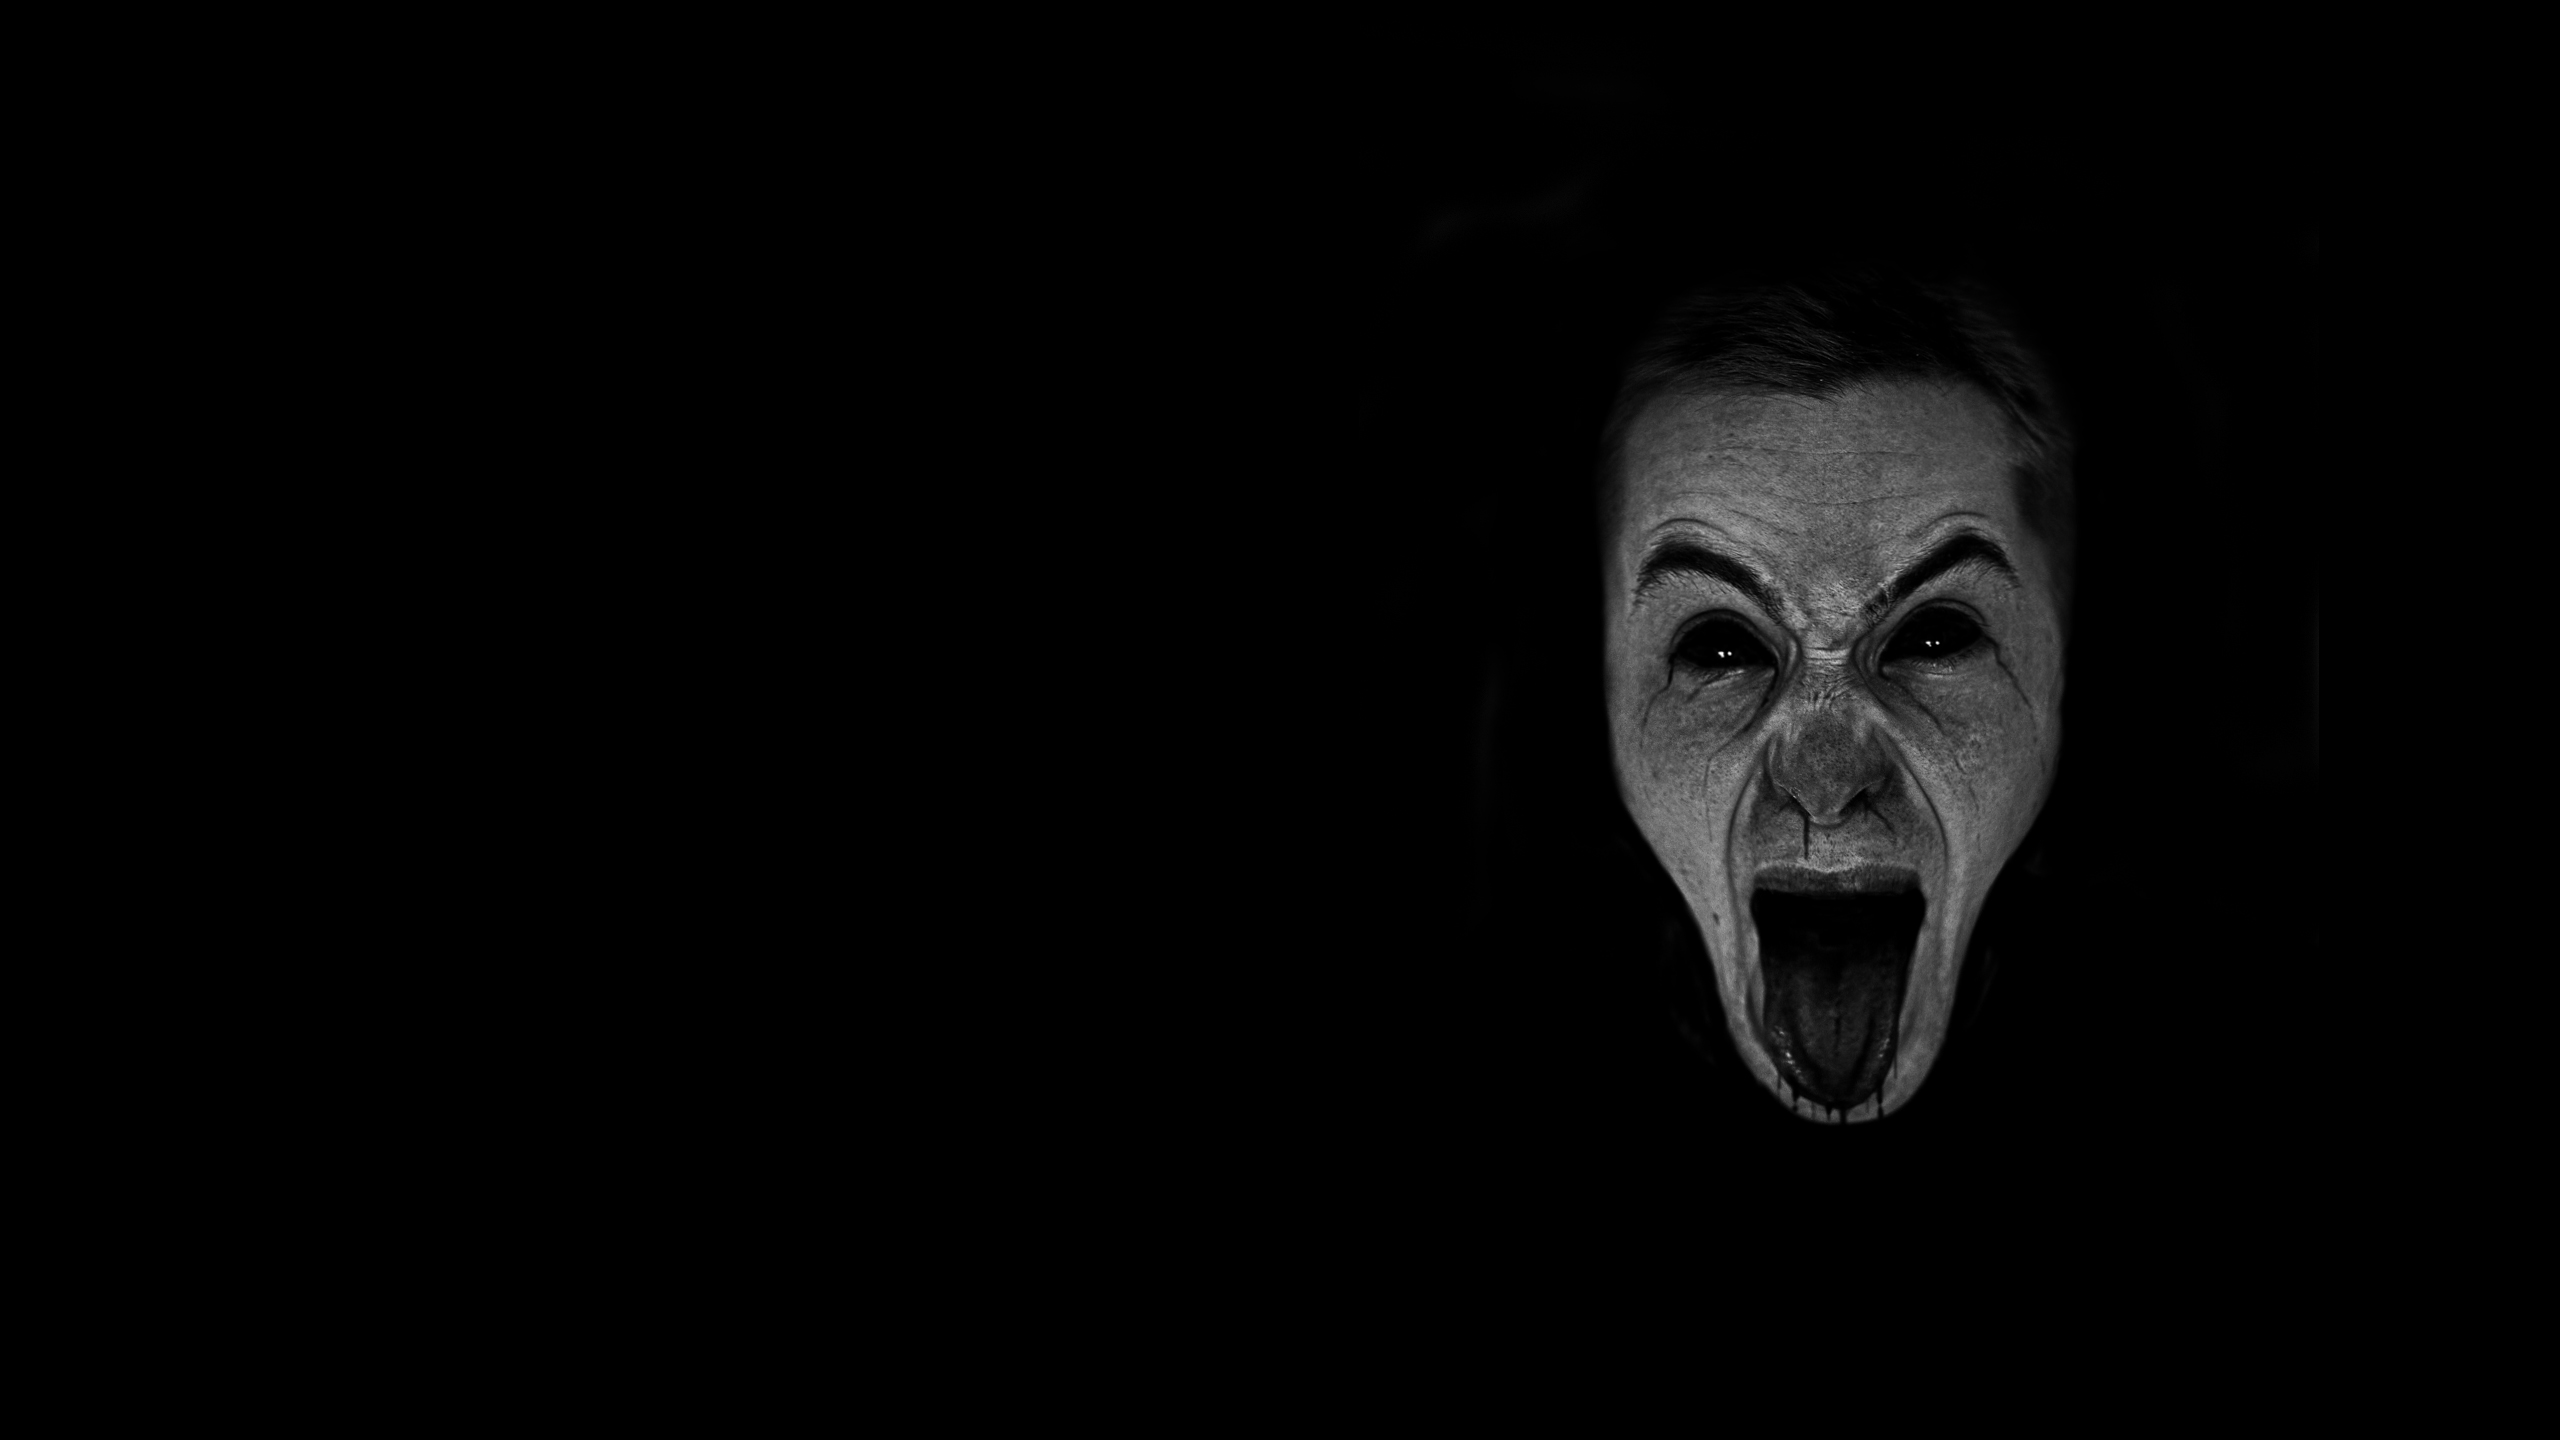 Dark Horror Gothic Mood Scream Expression Evil Face